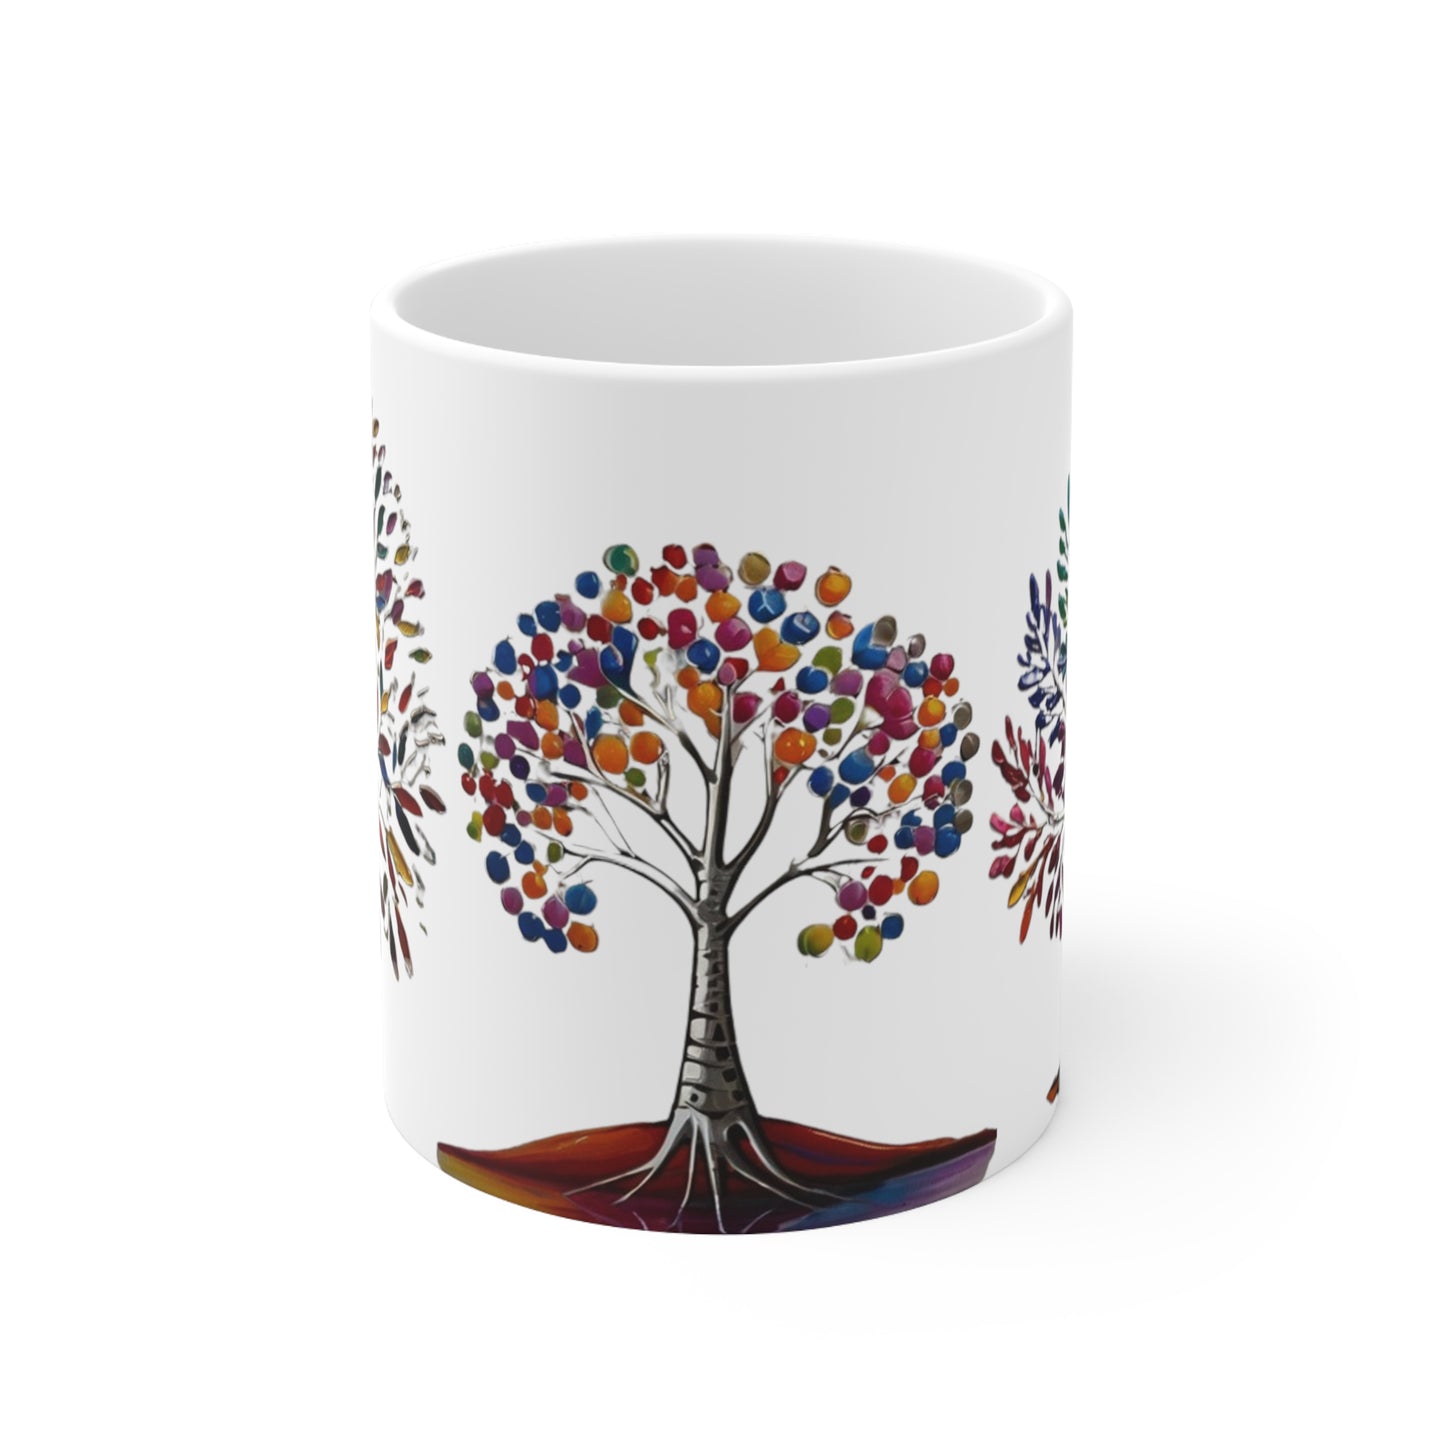 Colourful Silver Trees Mug - Ceramic Coffee Mug 11oz